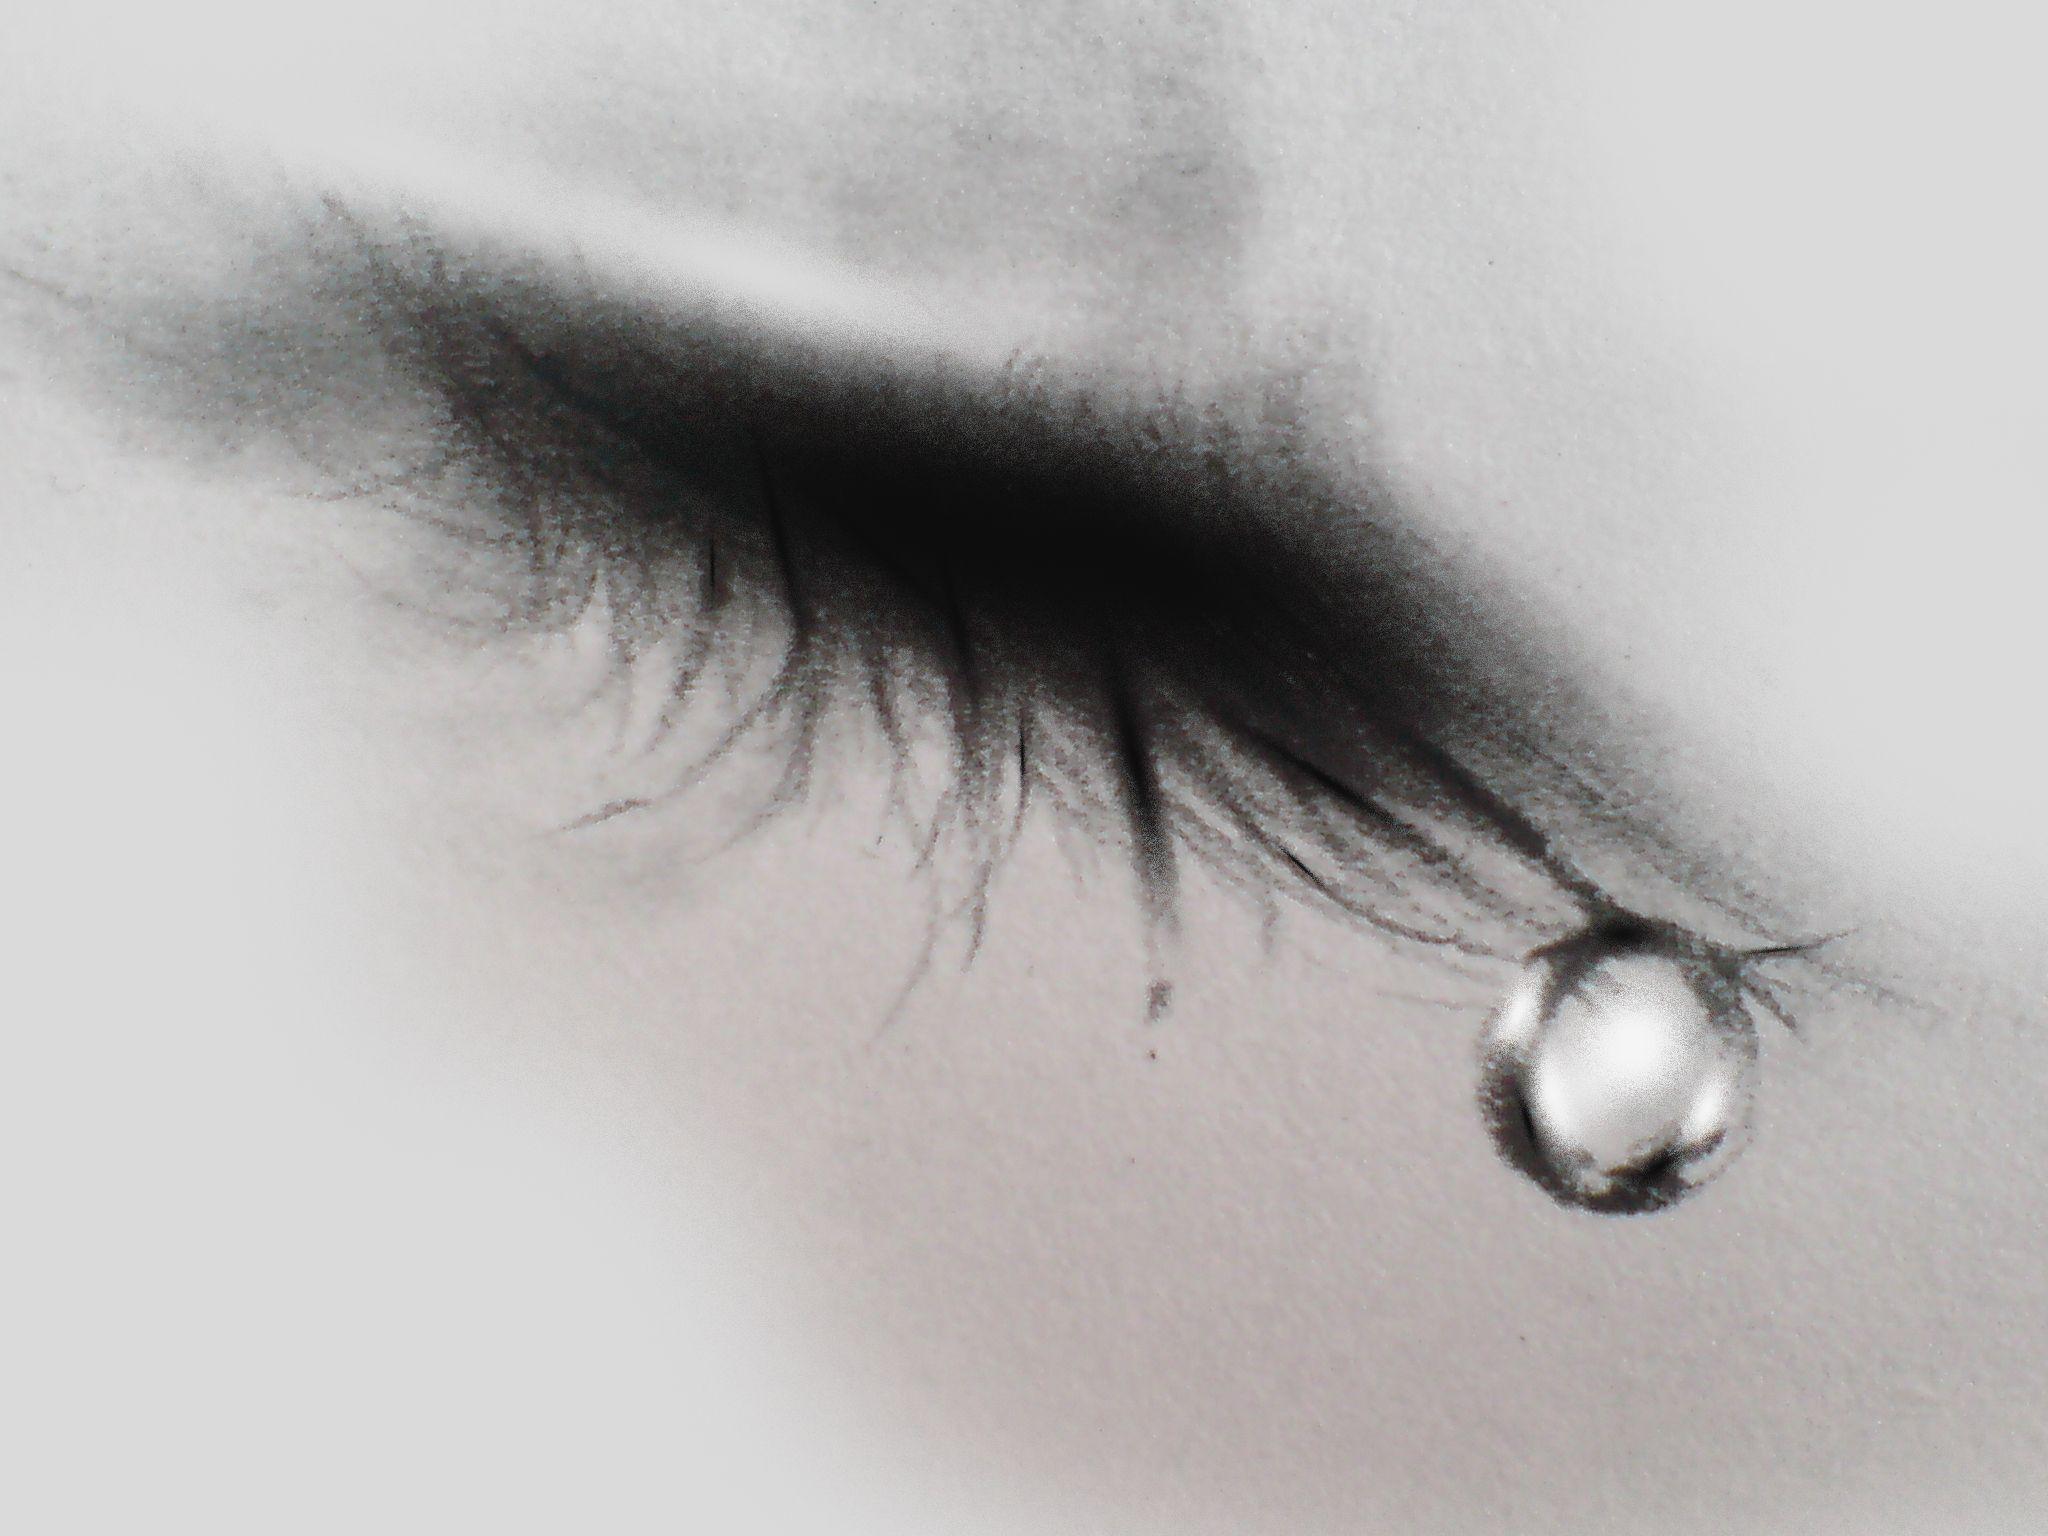 Sad Full Of Tears Wallpaper Crying Eyes Image HD